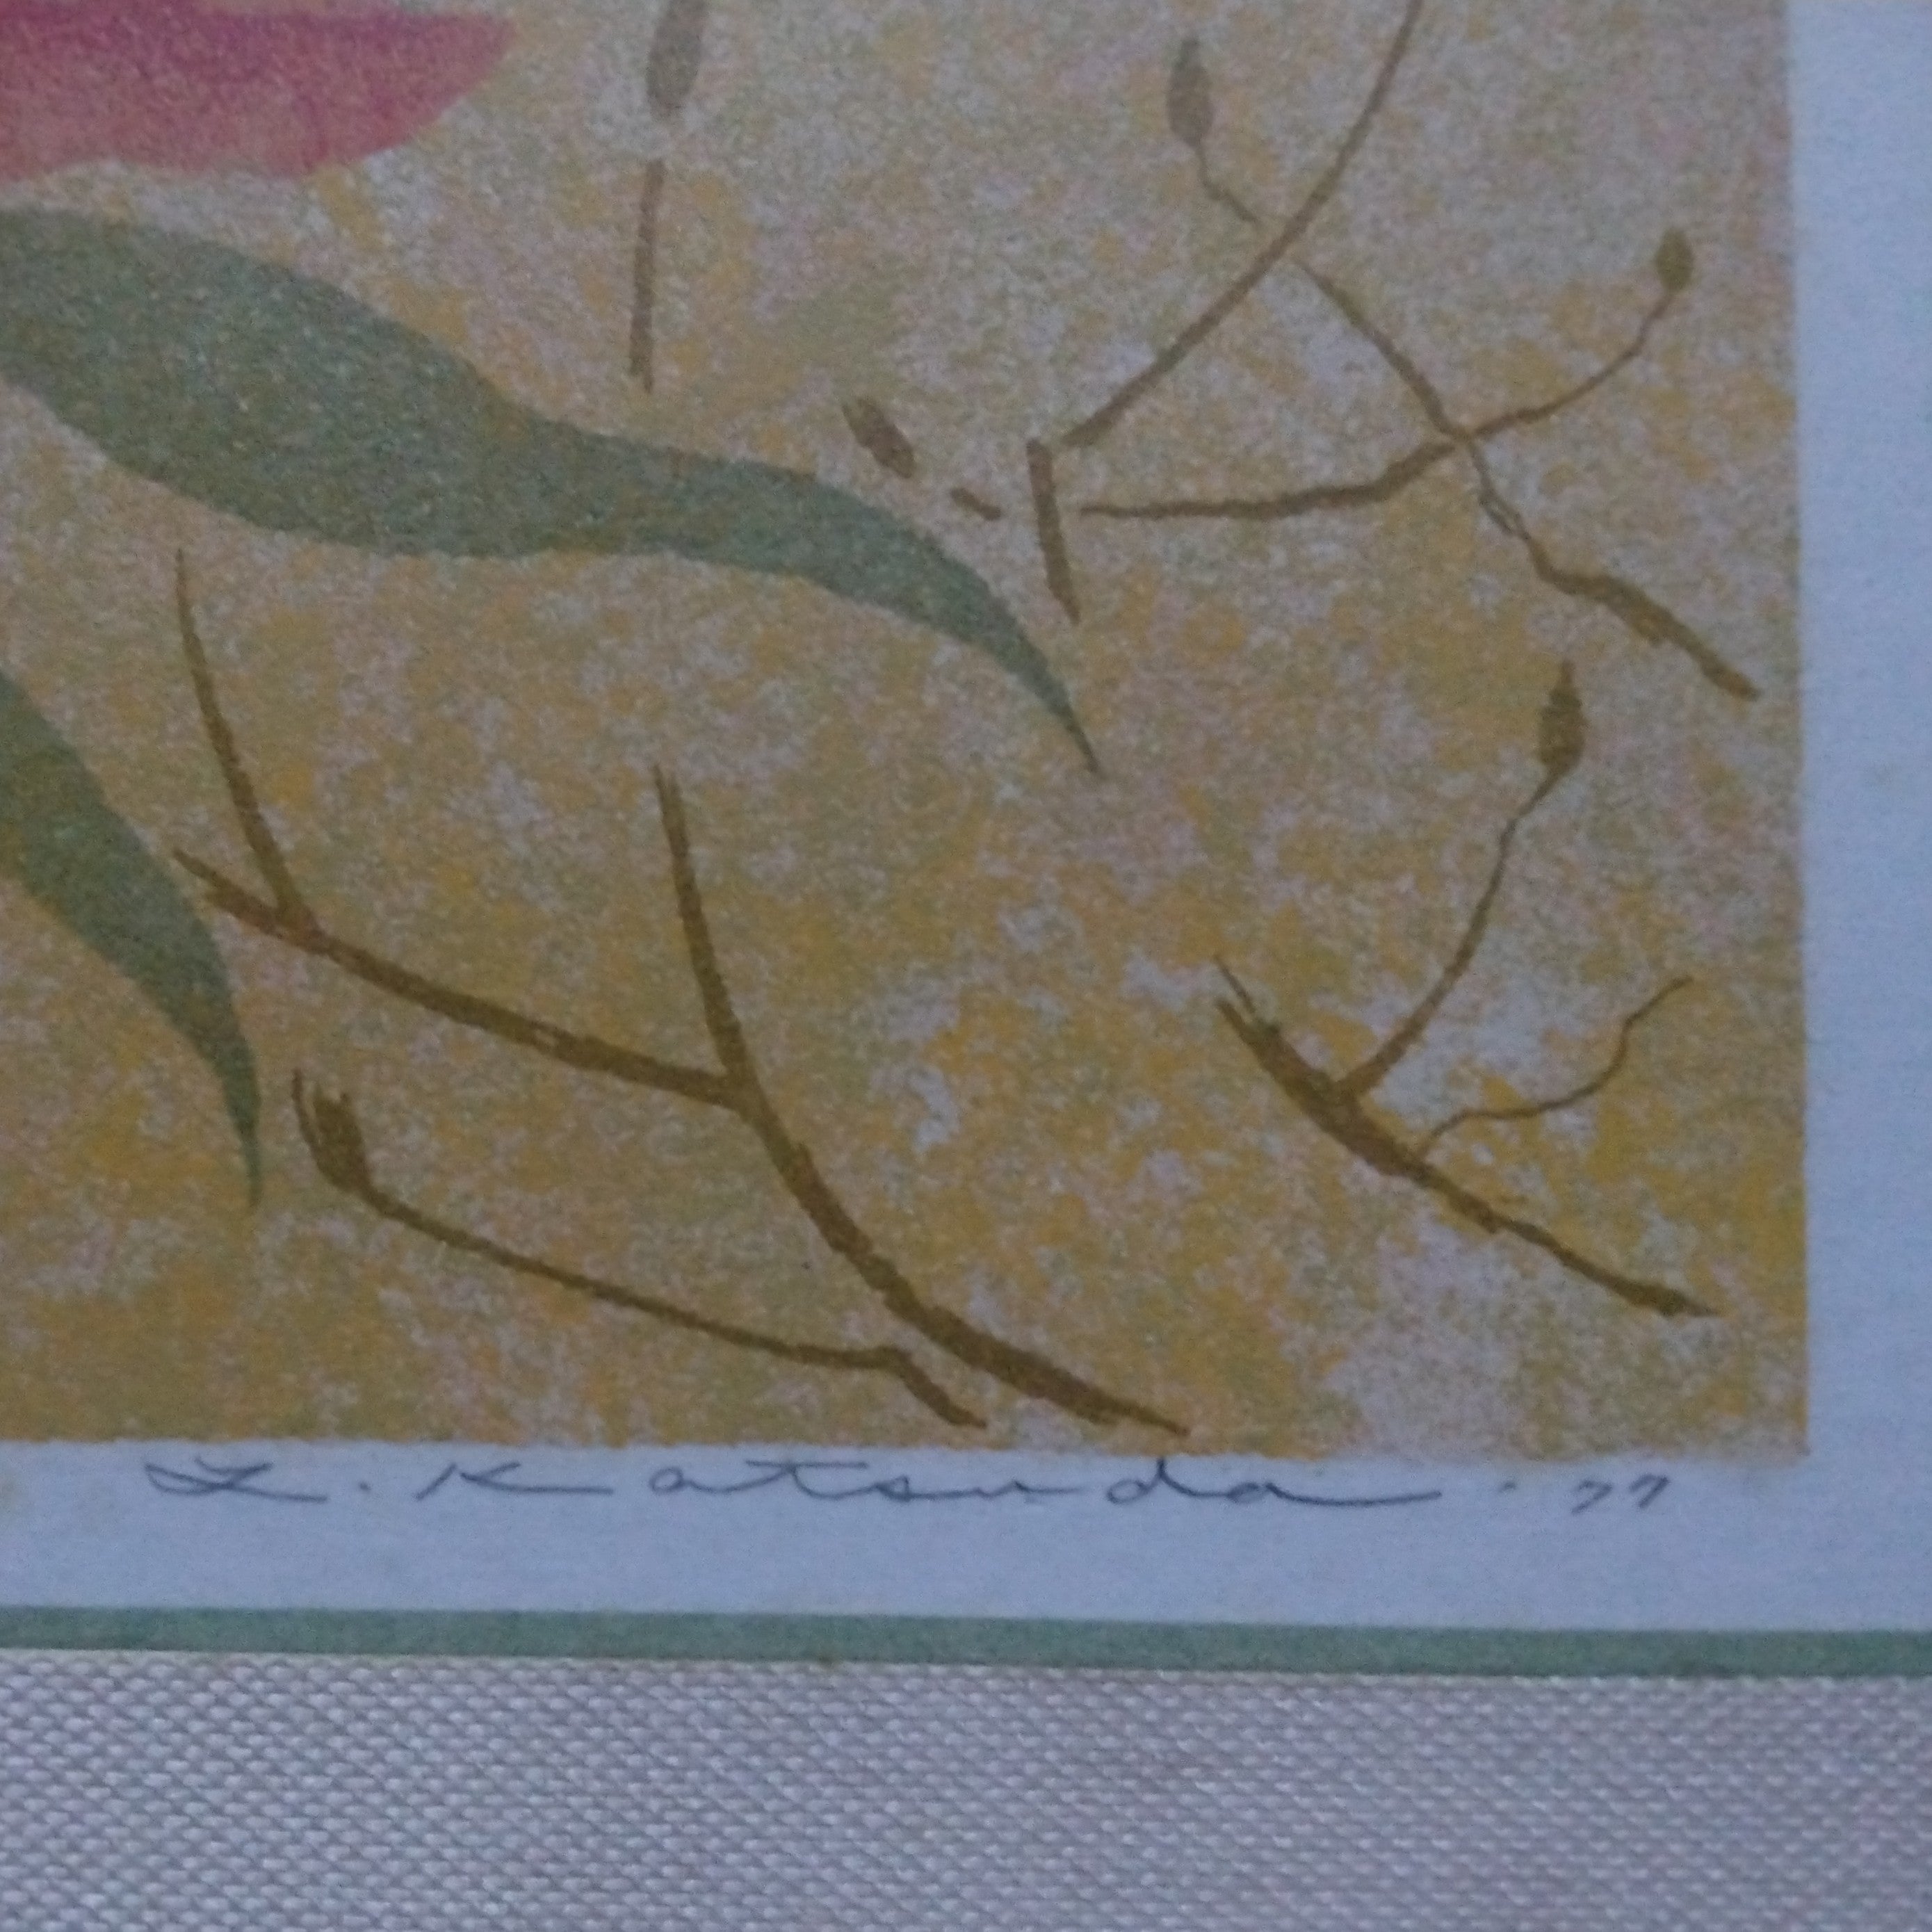 Katsuda Yukio Framed Silkscreen Print, "No. 106" Camellia